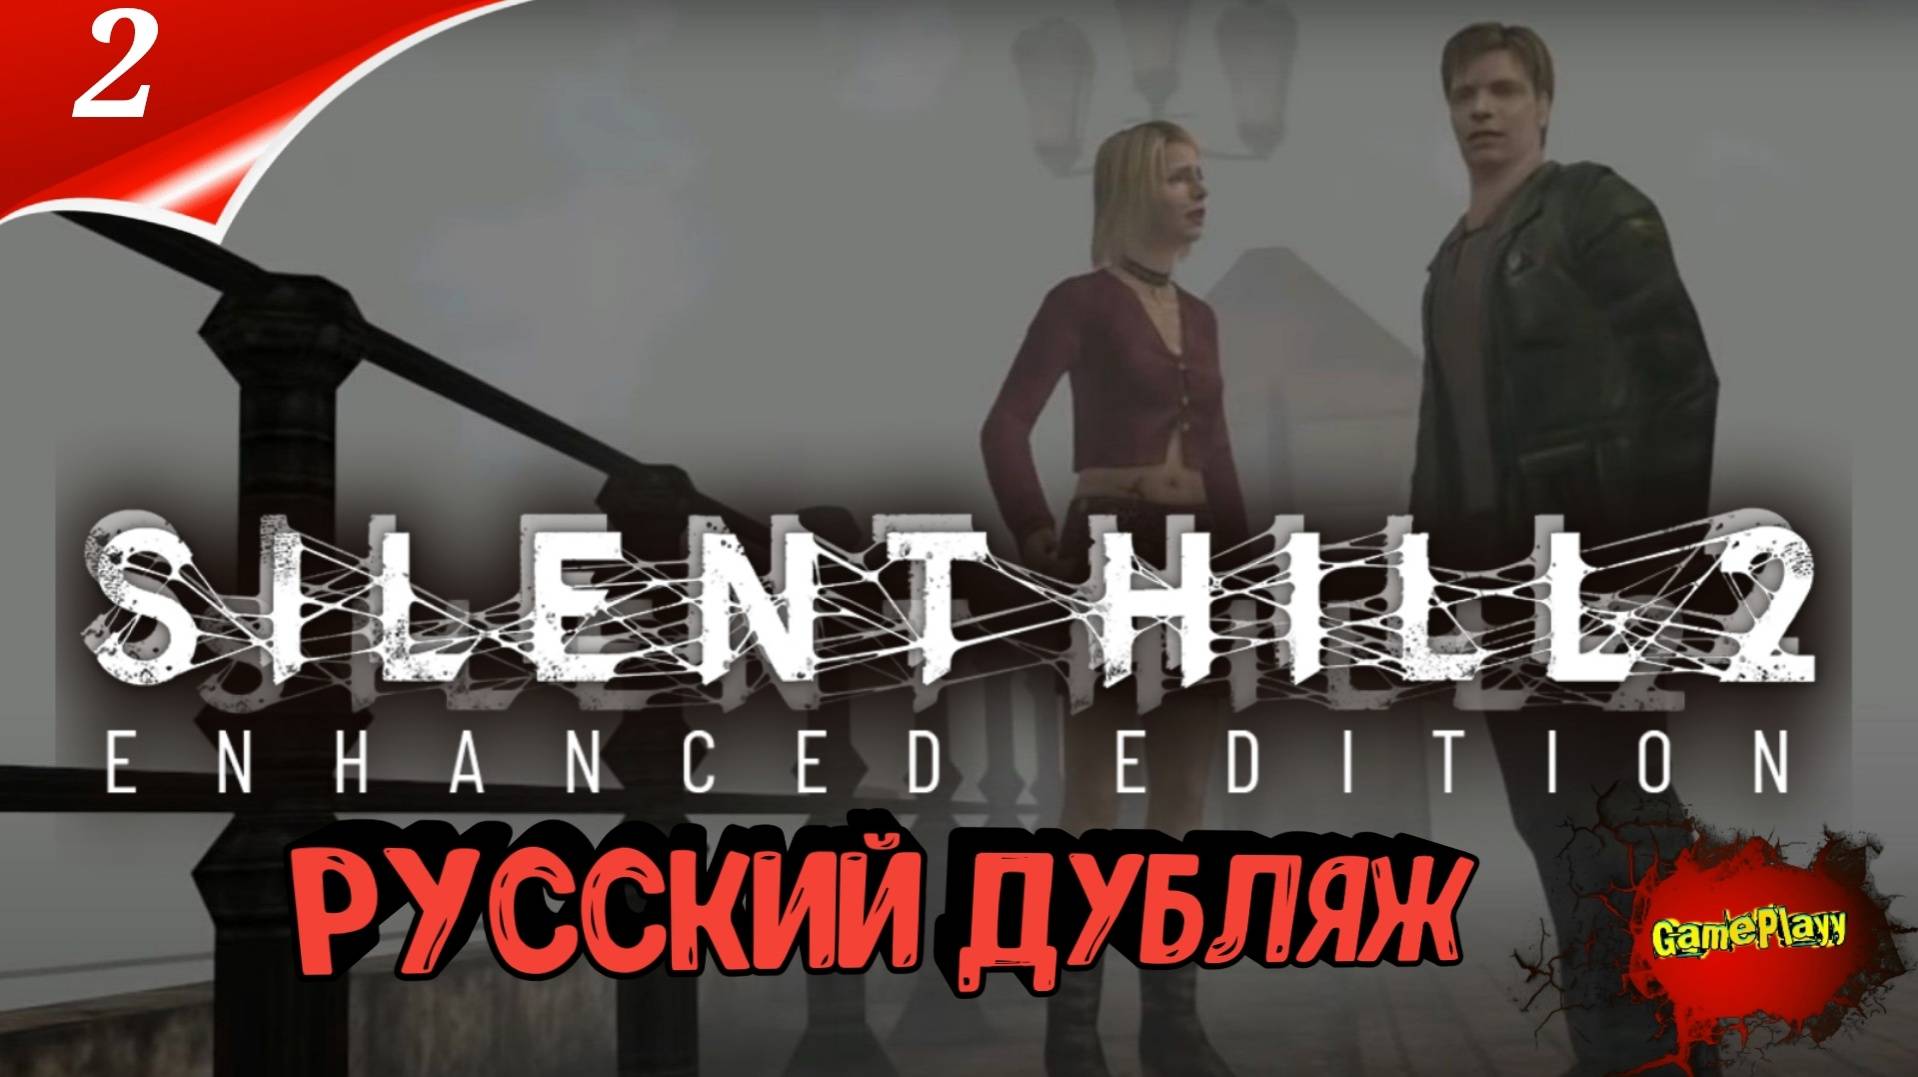 Silent Hill 2 enhanced edition | Русская локализация | Дубляж | part 2 | Озвучка #silenthill2